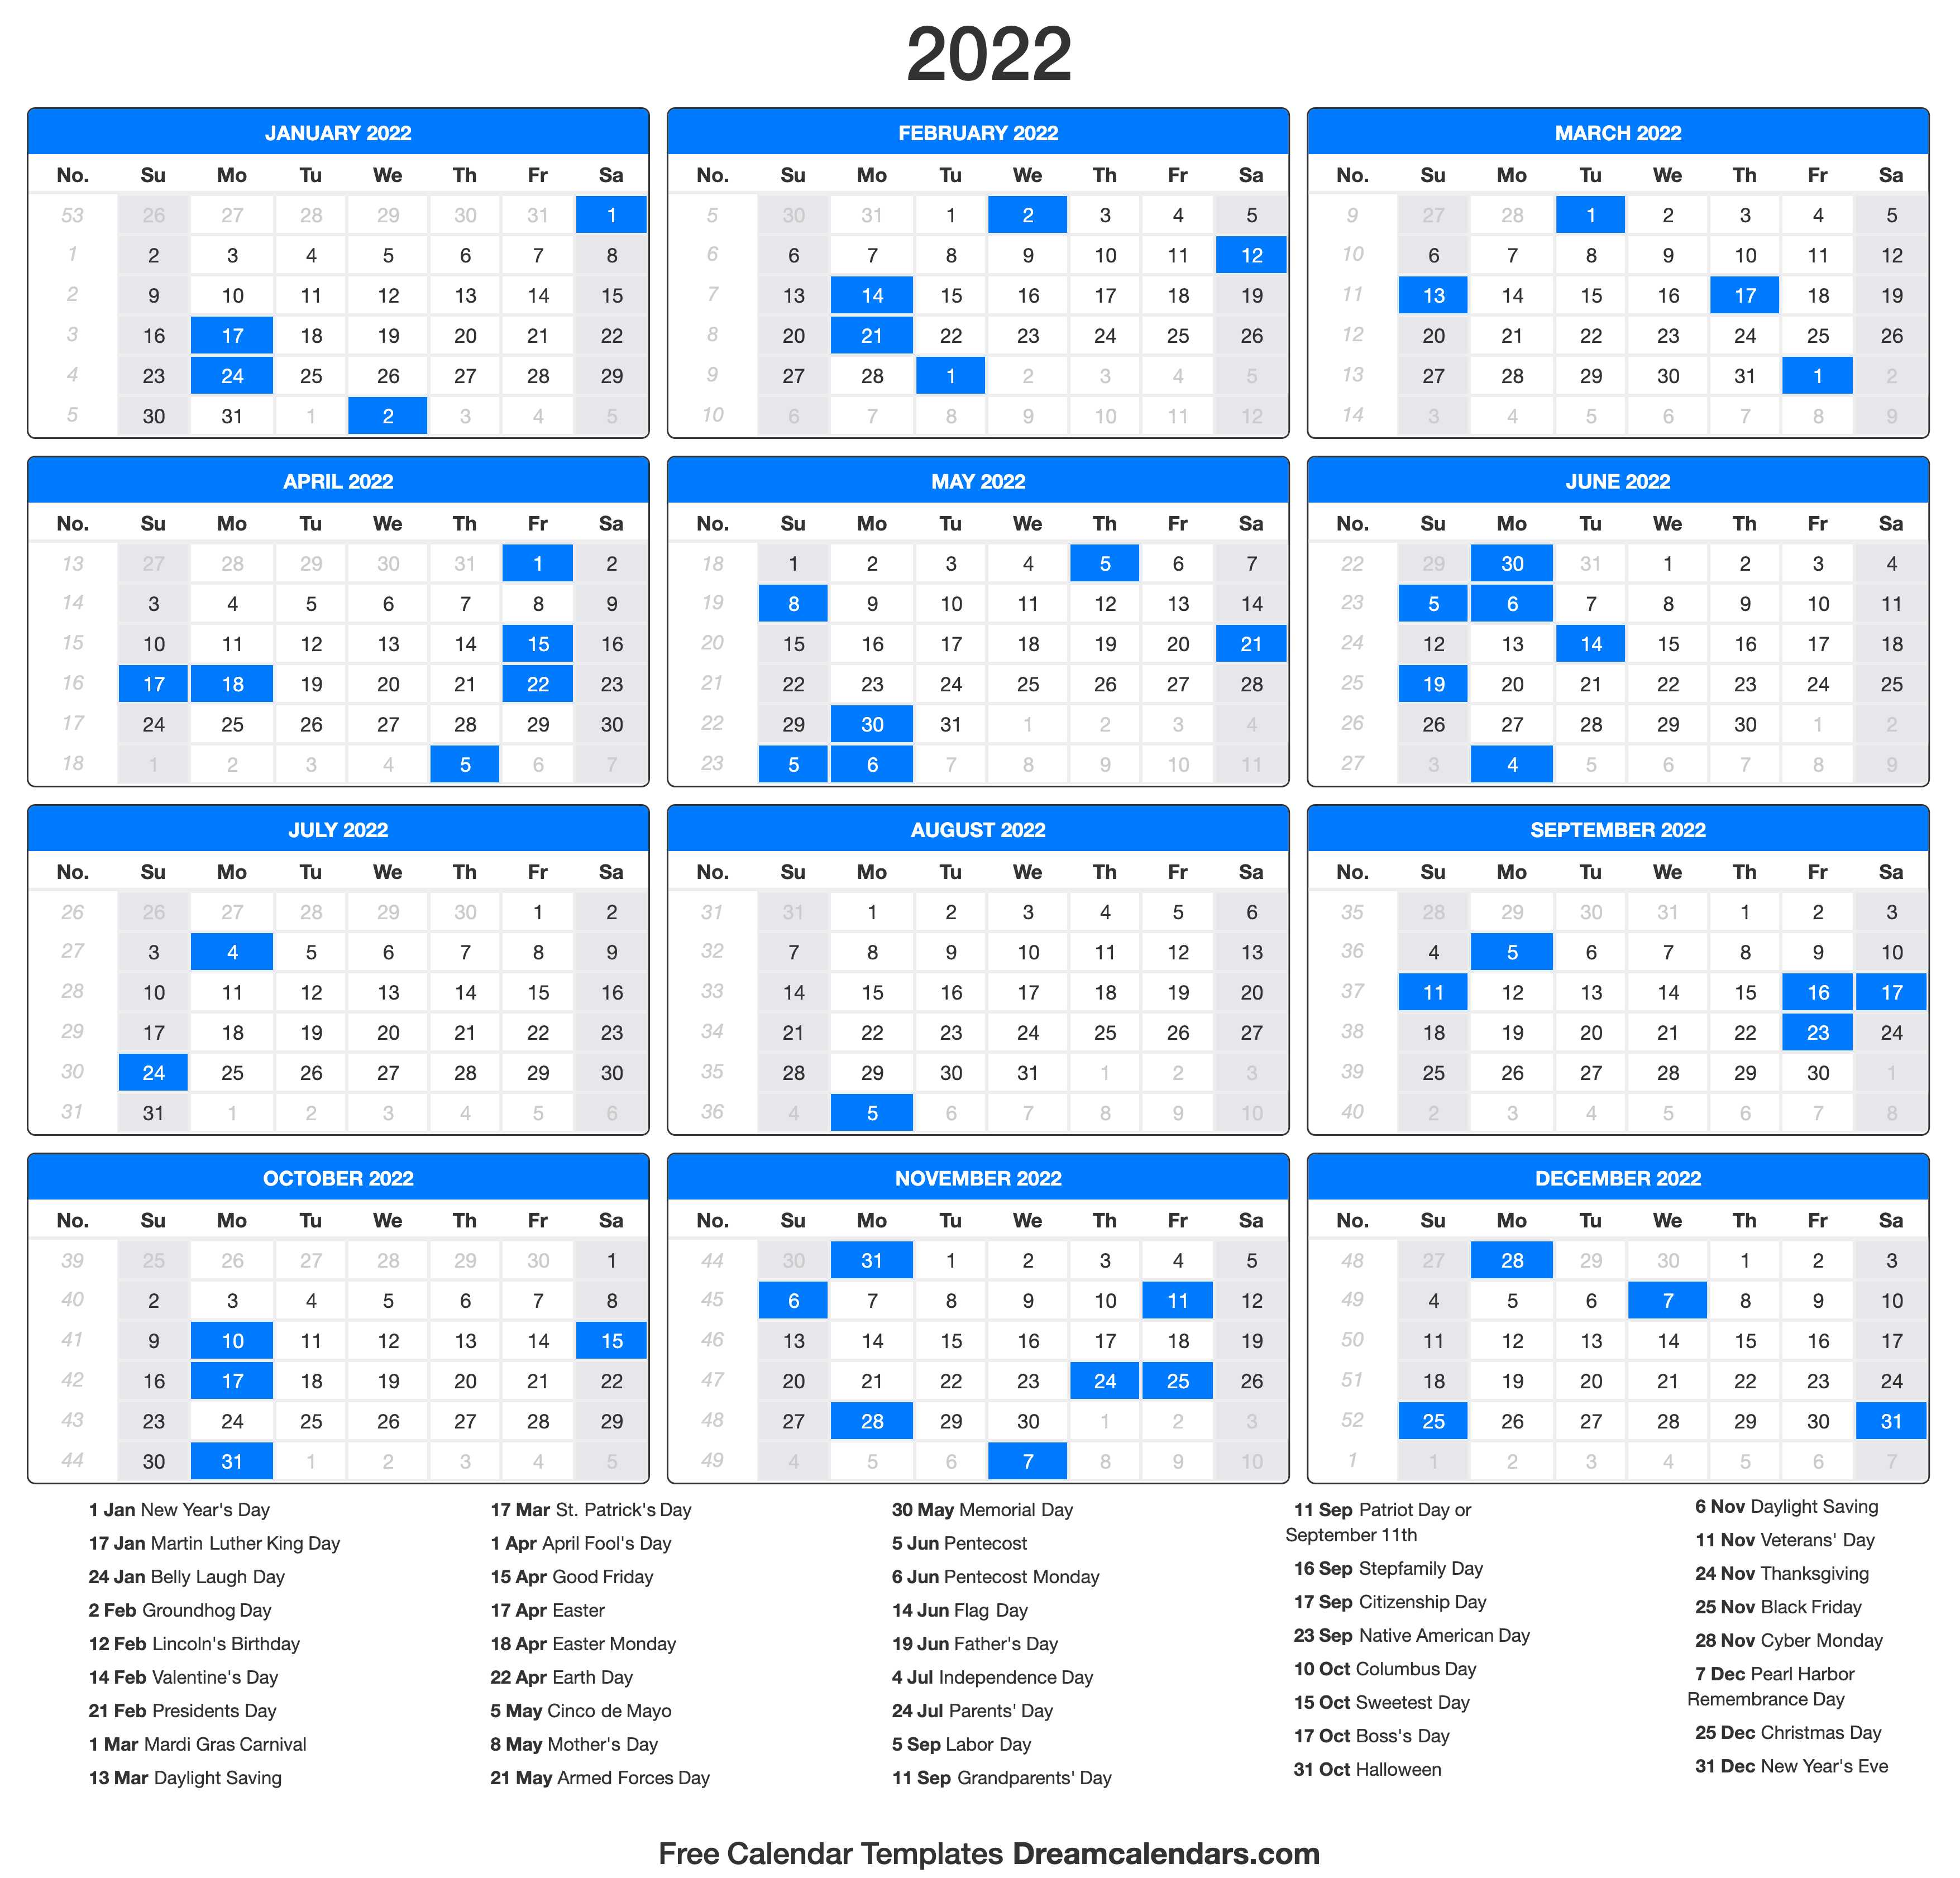 mini calendar printable 2022